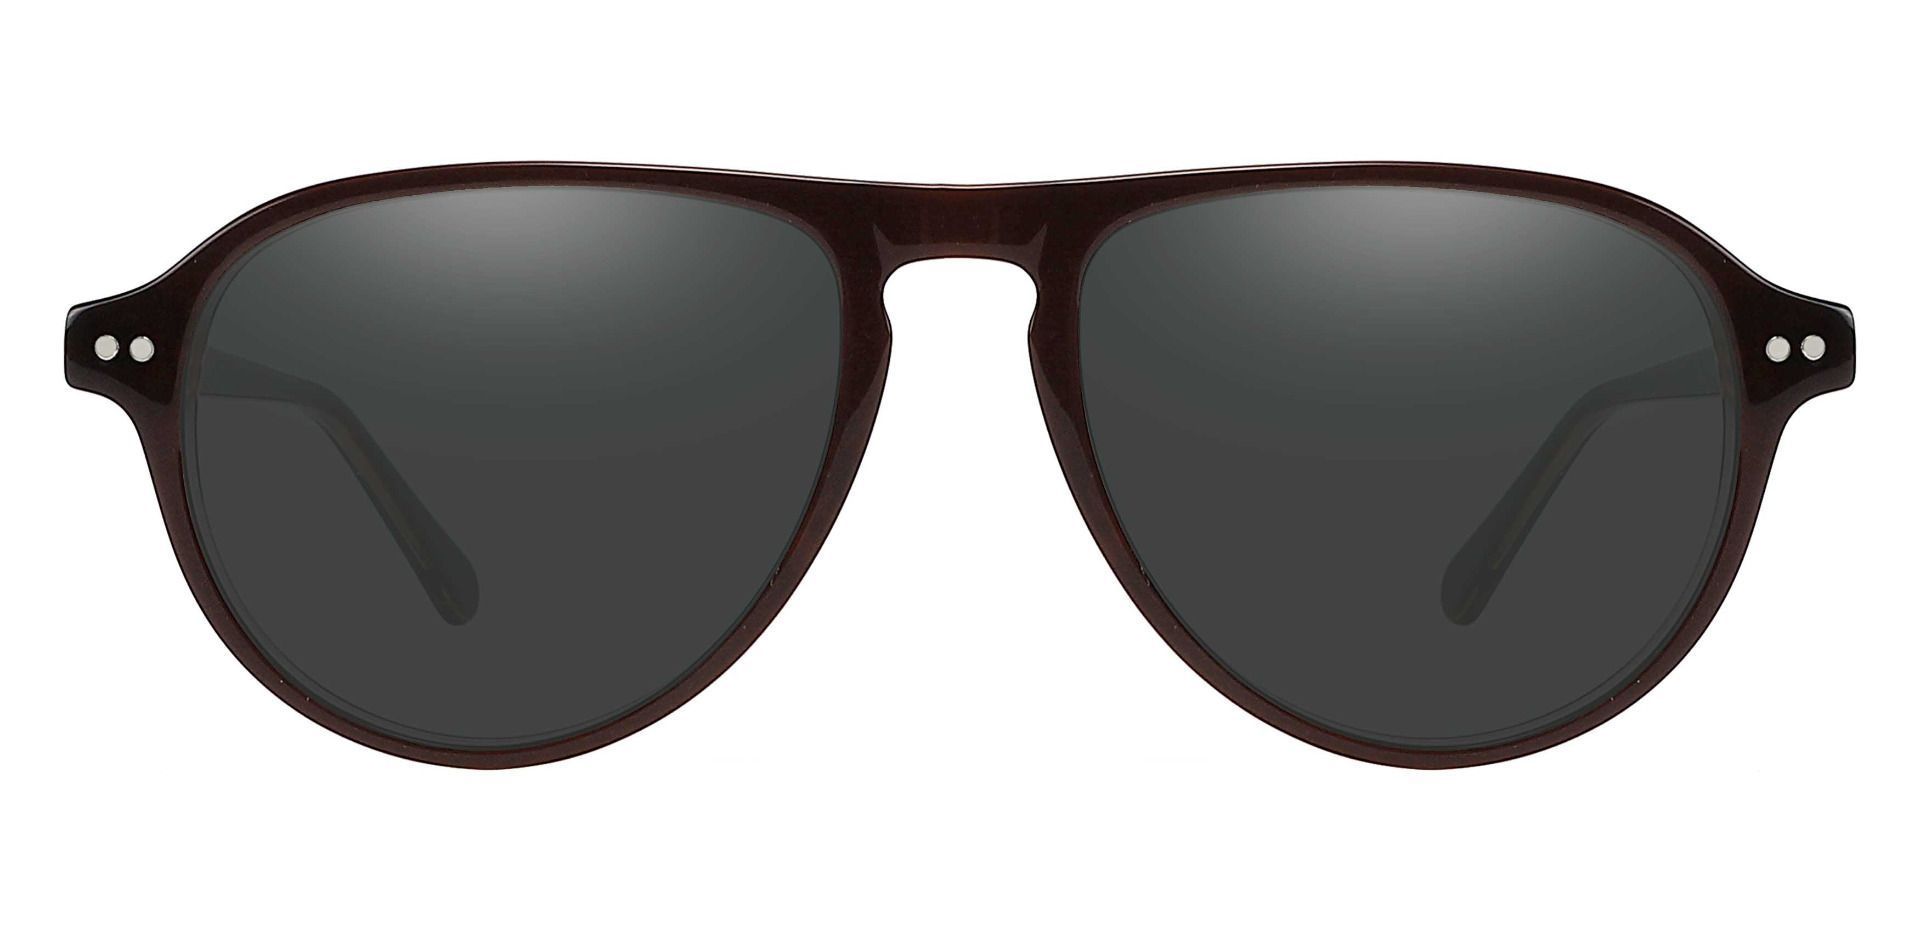 Durham Aviator Prescription Sunglasses - Brown Frame With Gray Lenses